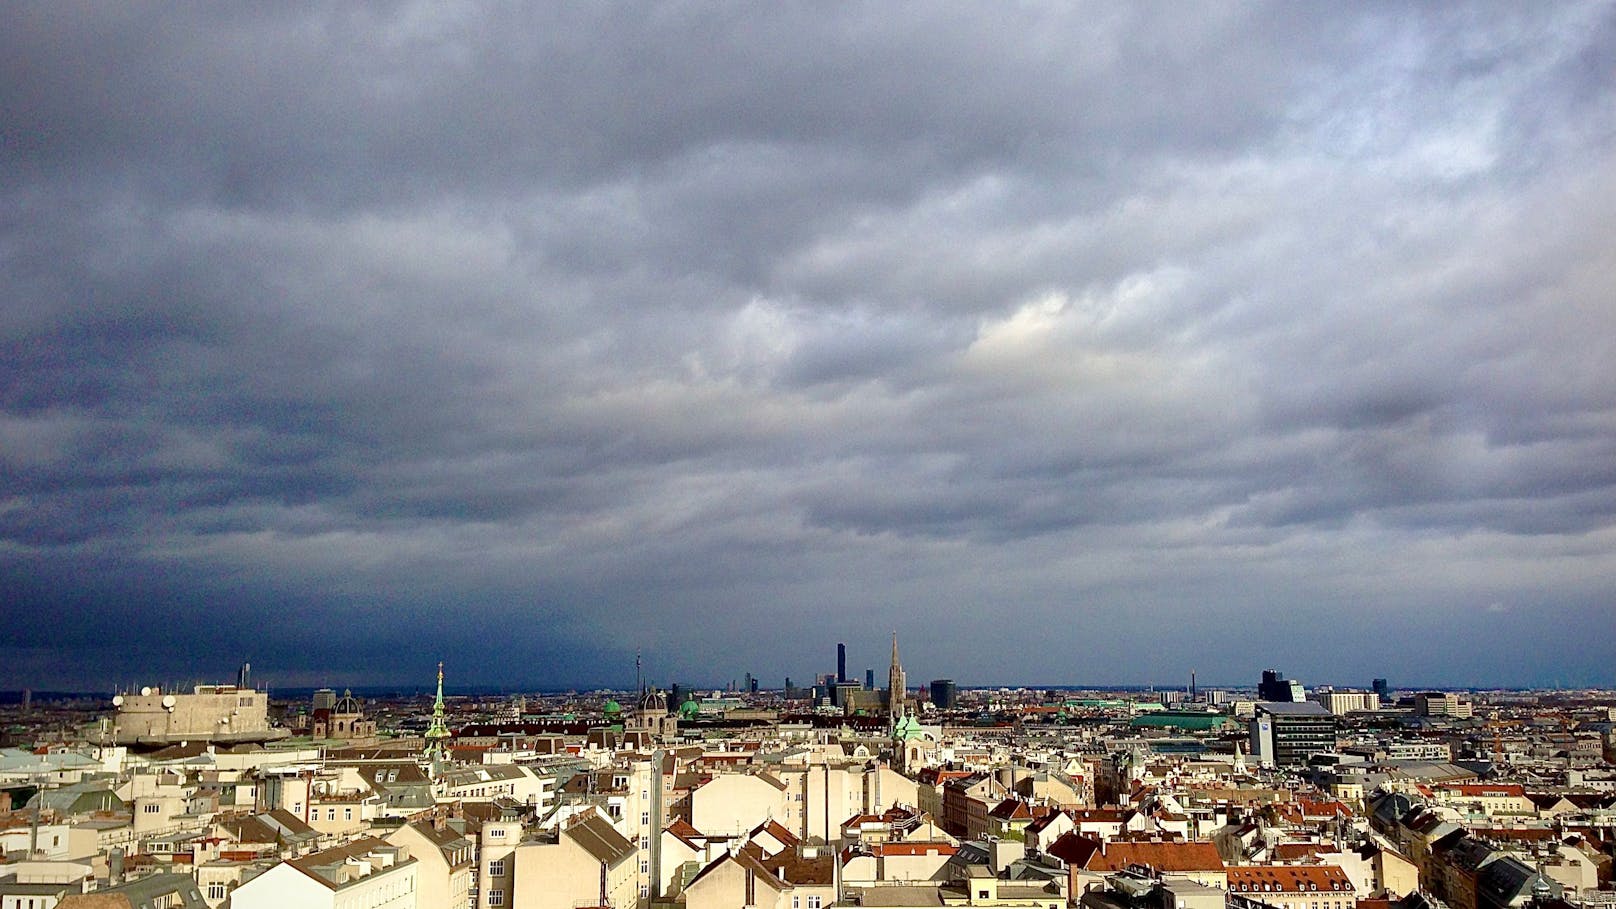 Sturmwarnung in Wien – dann ändert sich Wetter völlig